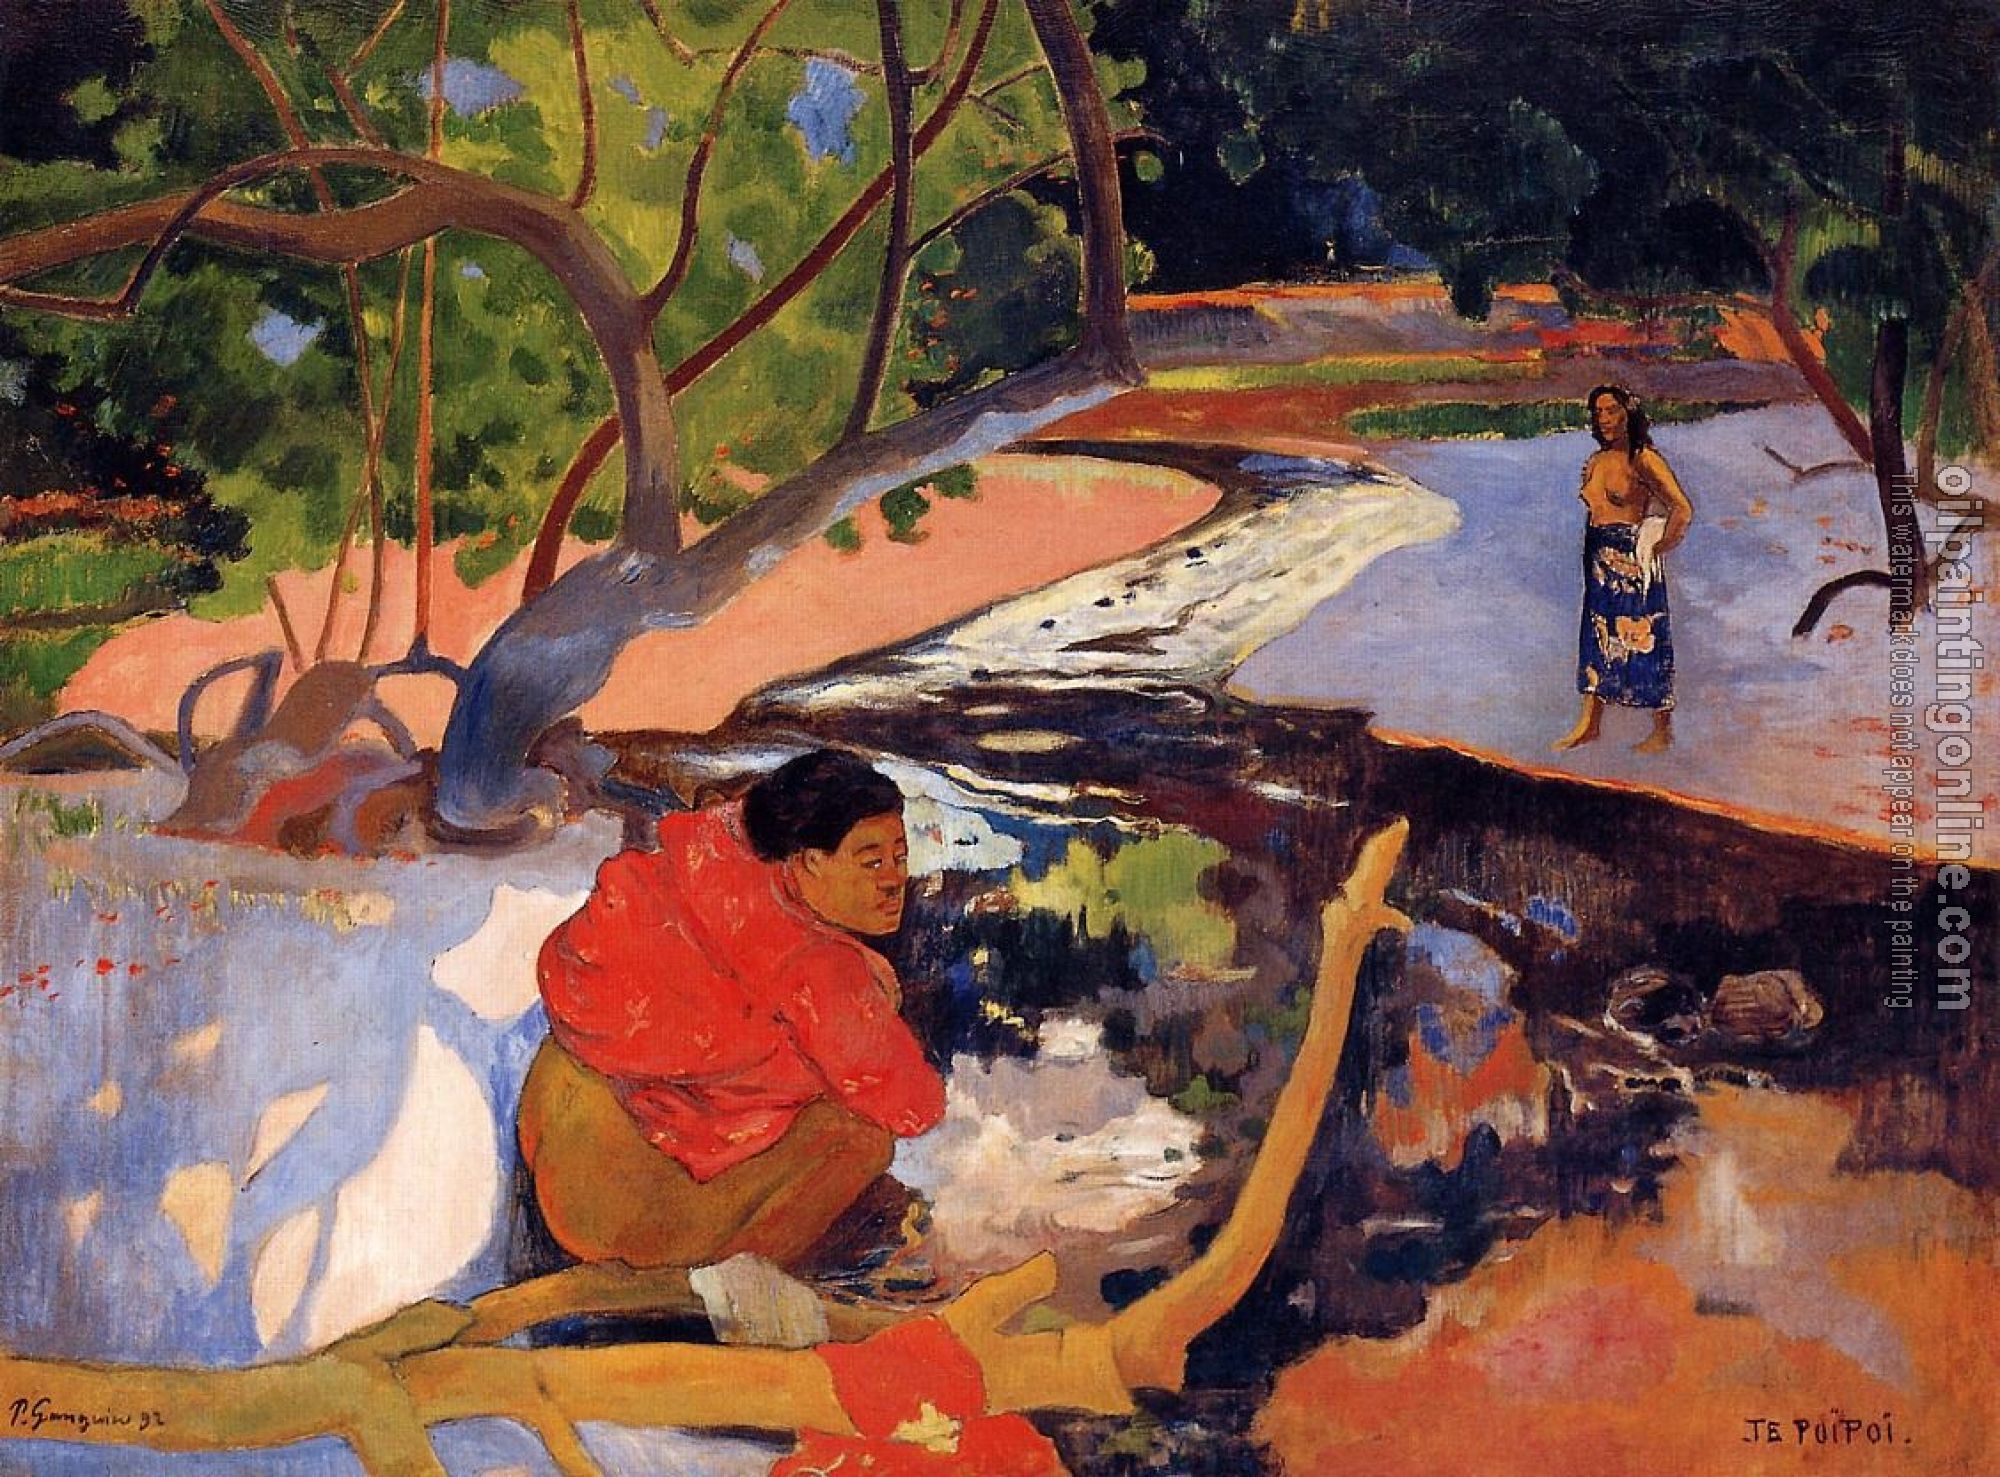 Gauguin, Paul - Te Poipoi